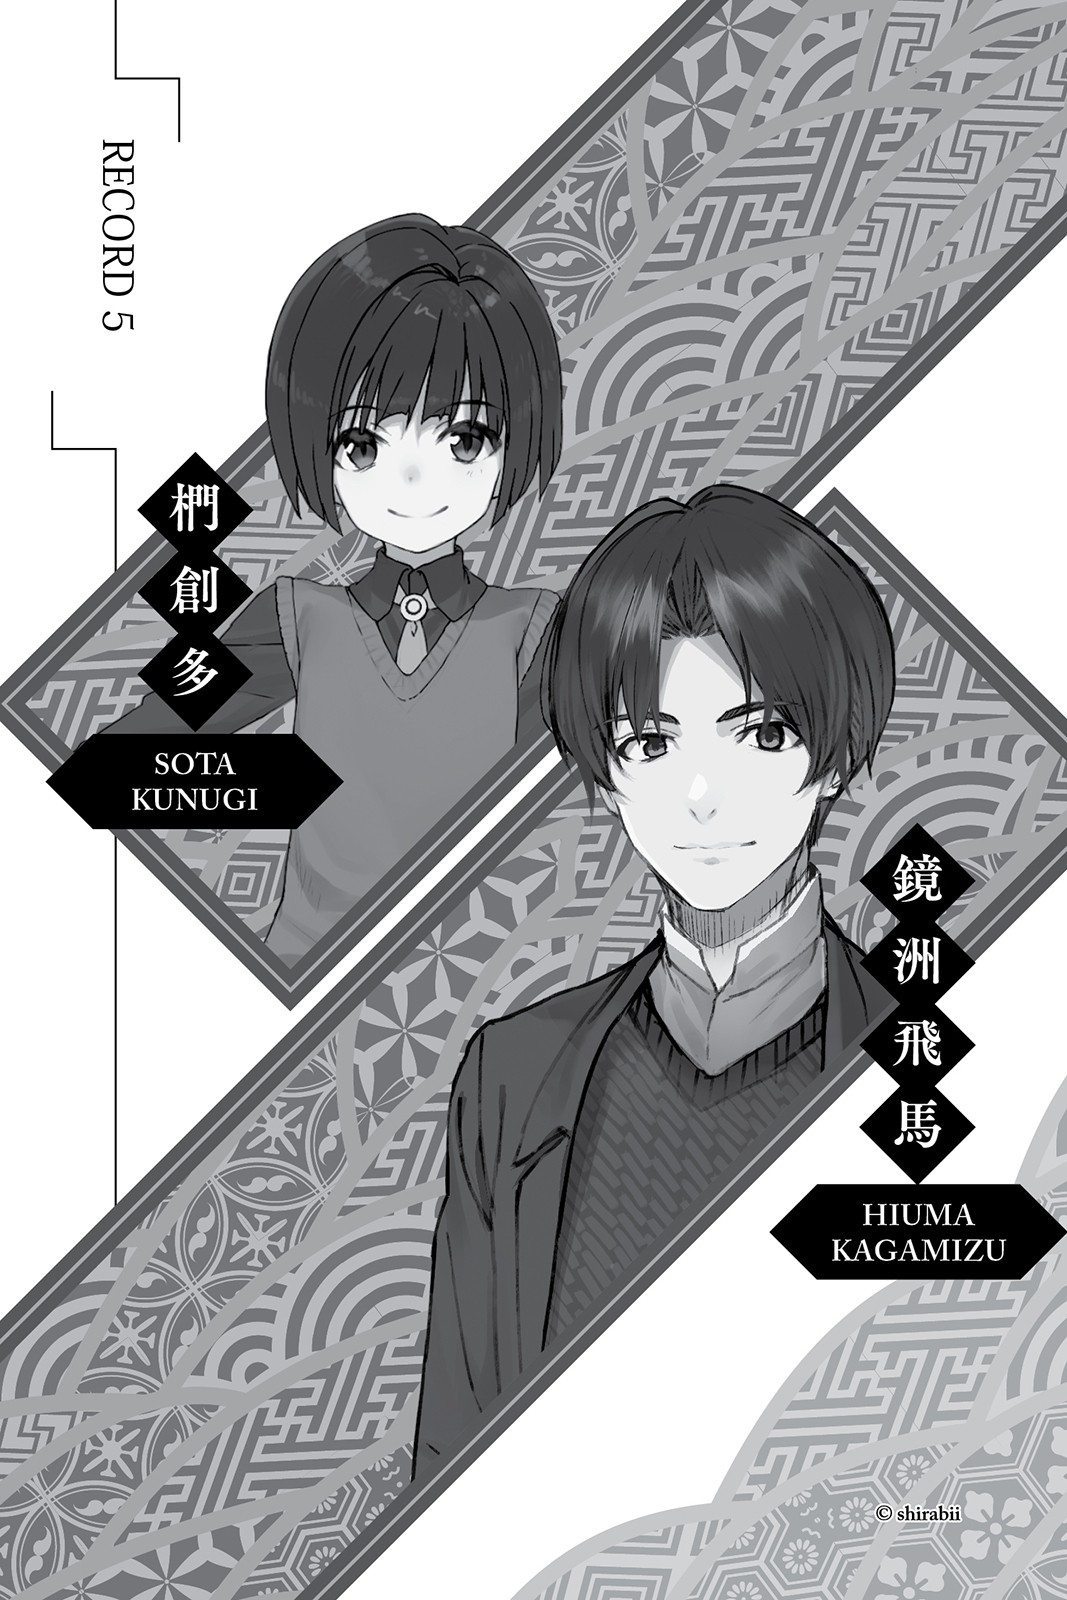 [Ruidrive] - Ilustrasi Light Novel Ryuuou no Oshigoto! - Volume 12 - 014